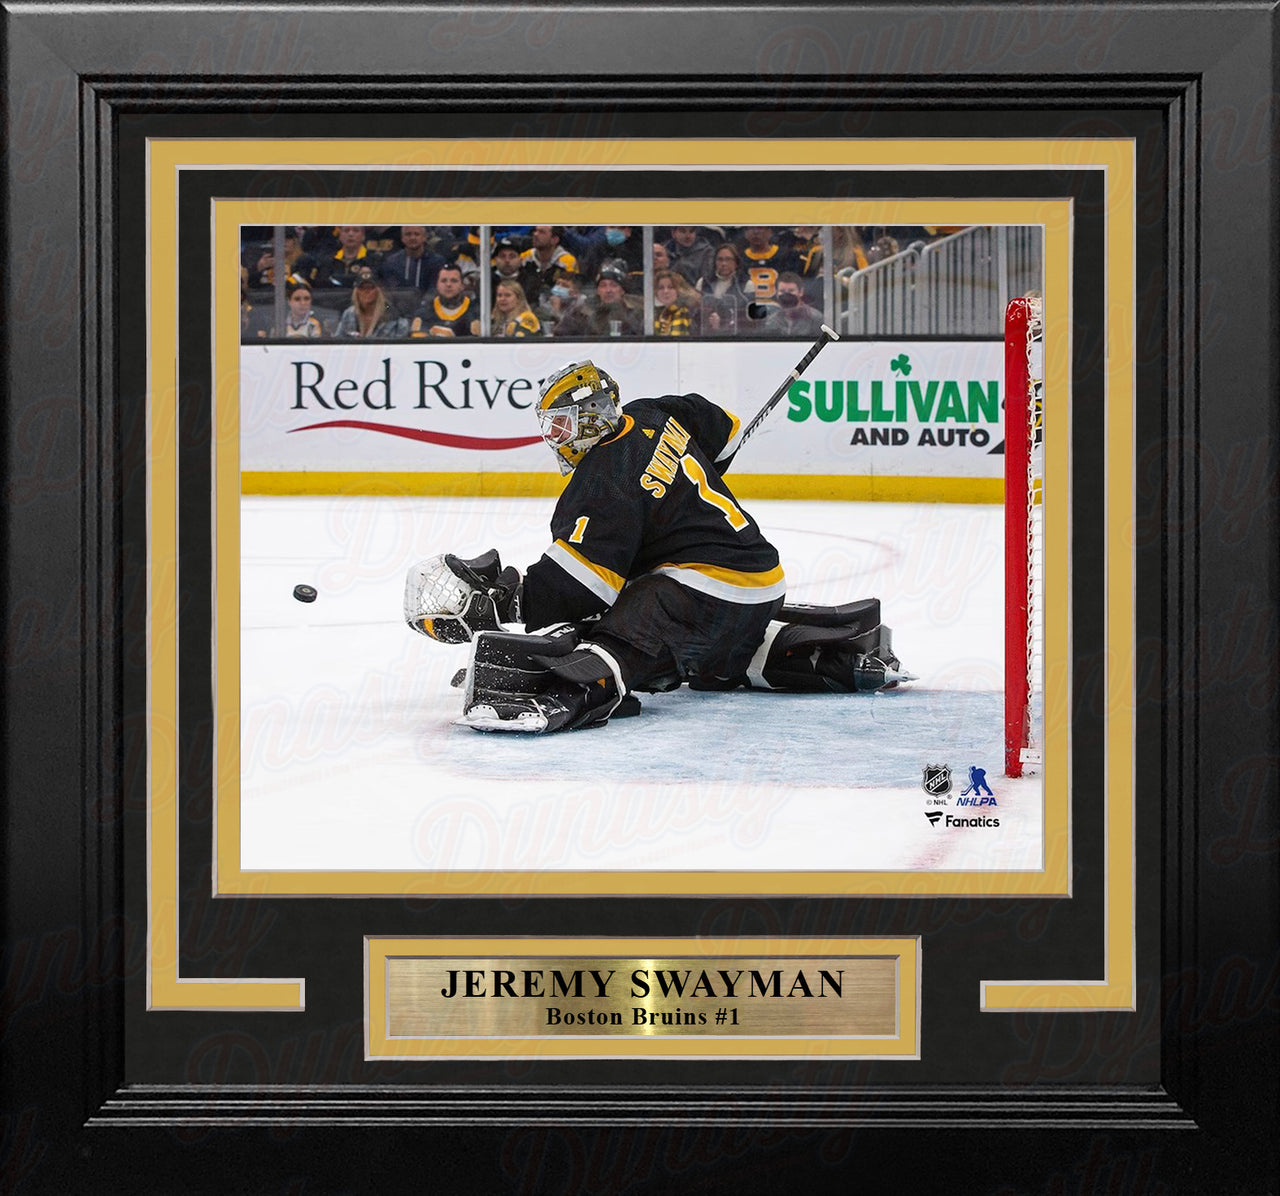 Jeremy Swayman in Action Boston Bruins 8" x 10" Framed Hockey Photo - Dynasty Sports & Framing 